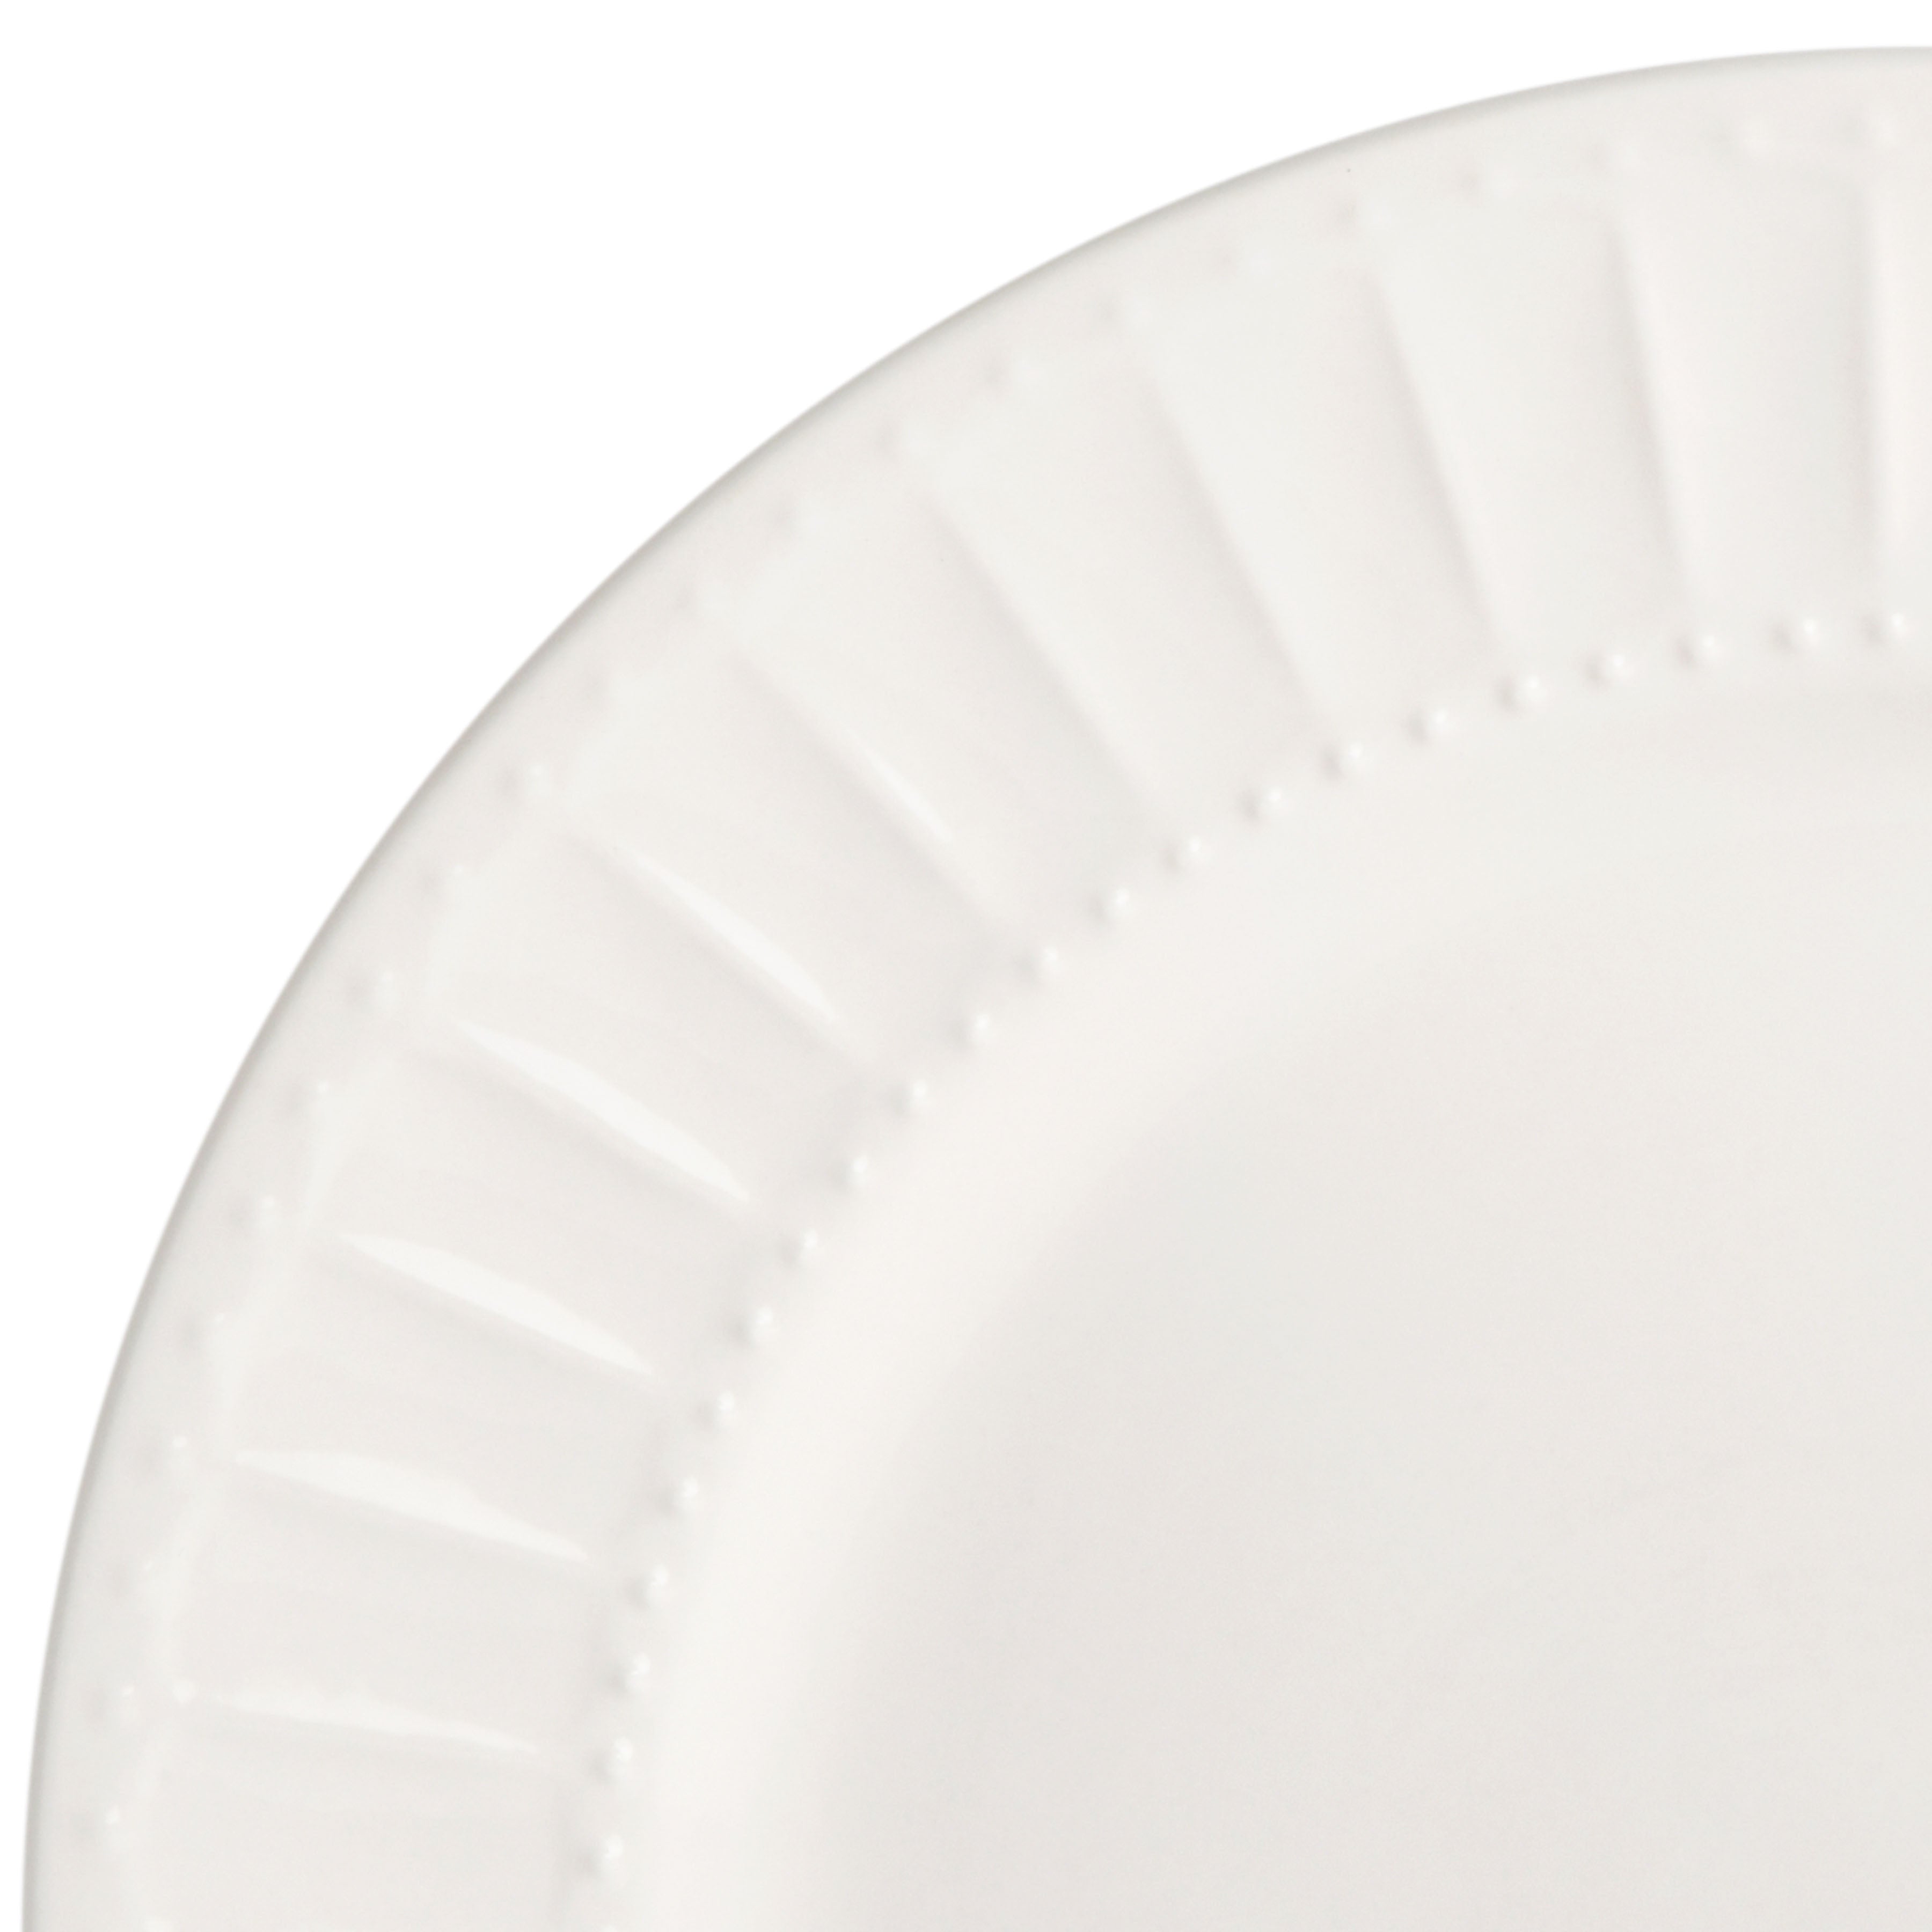 Gibson Home Regalia 46-Piece Dinnerware and Serveware Set